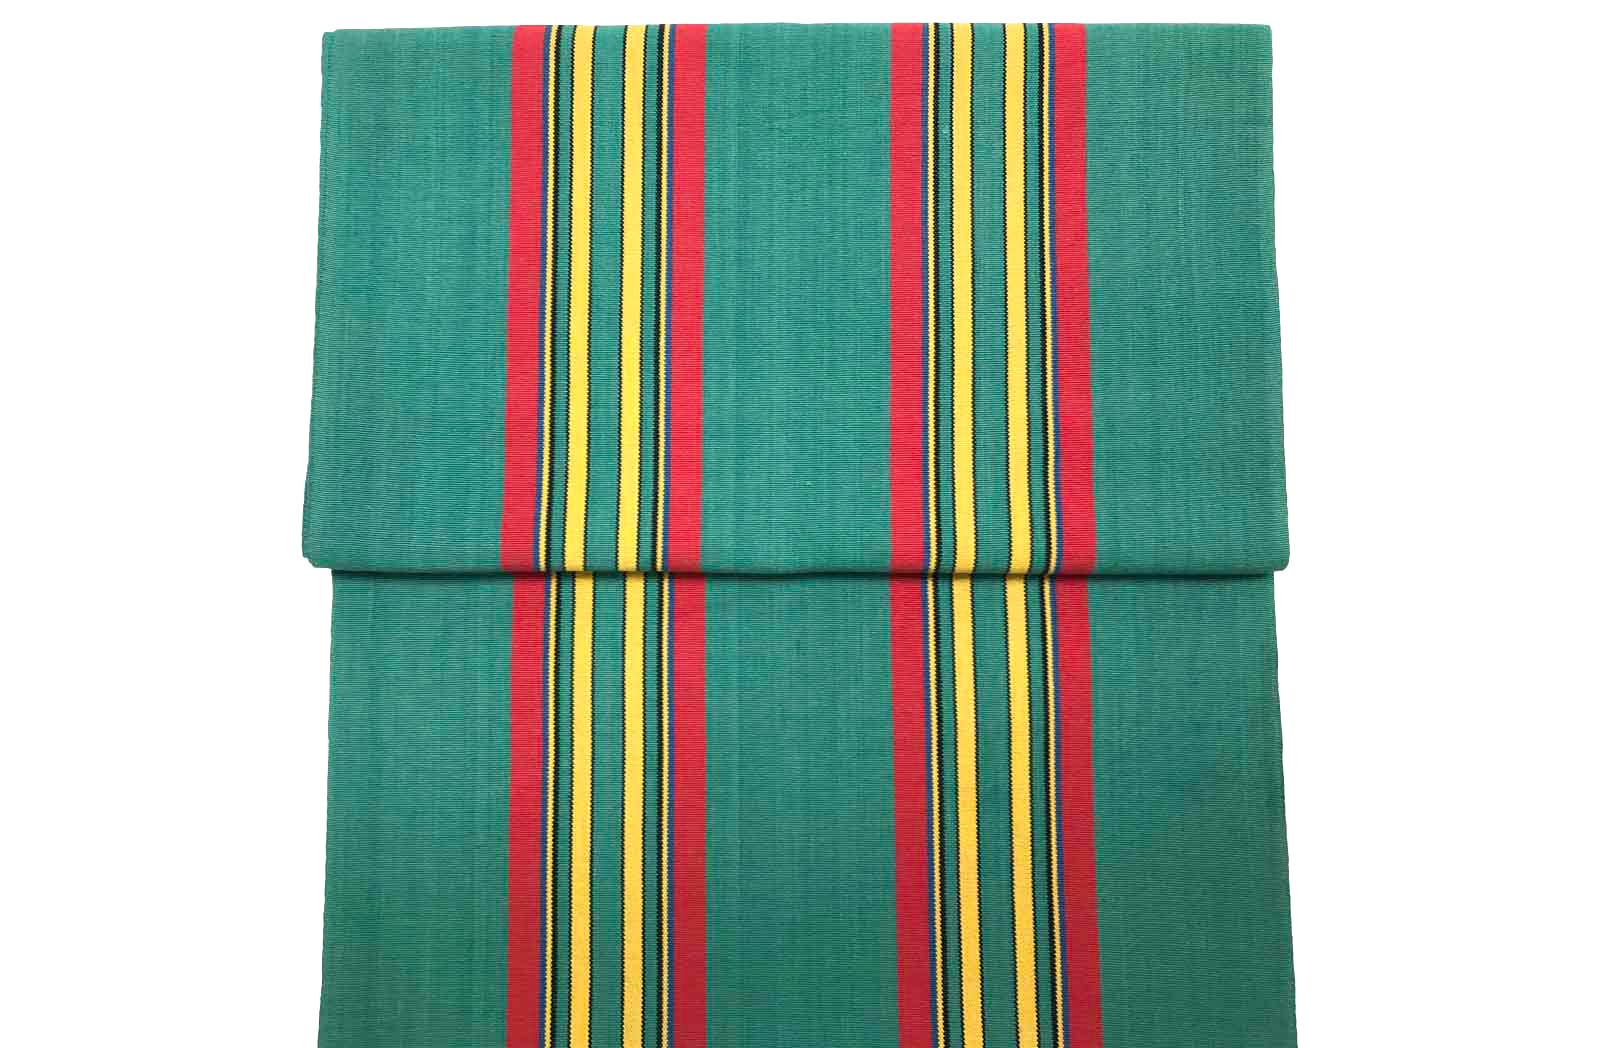 Vintage Deckchair Fabric Jade green, red, yellow stripes  